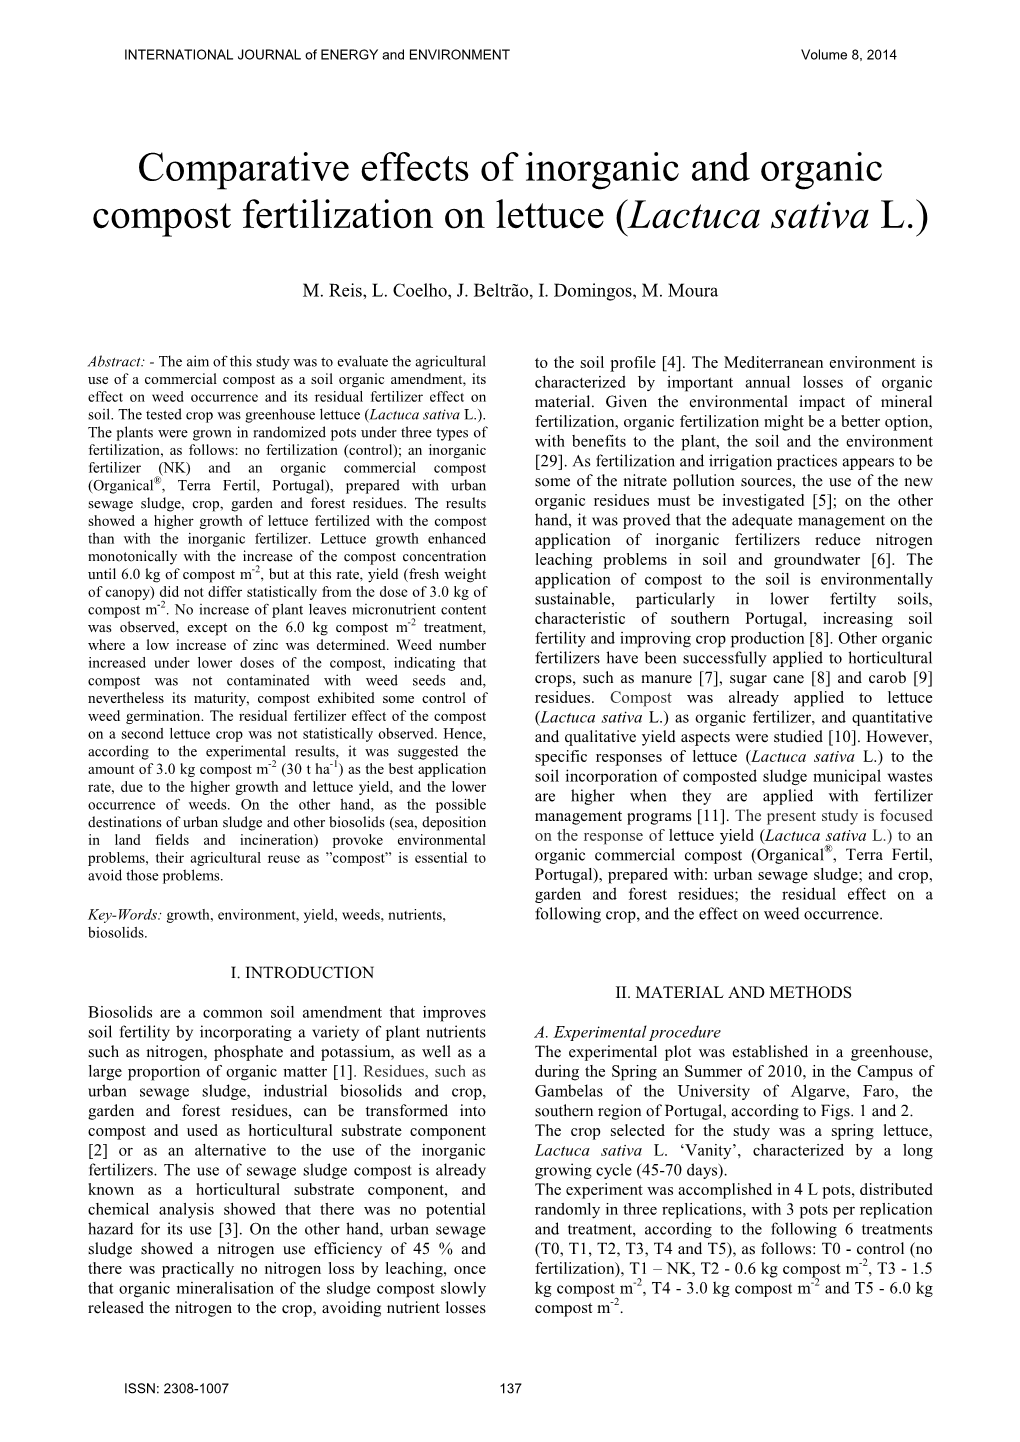 Comparative Effects of Inorganic and Organic Compost Fertilization on Lettuce (Lactuca Sativa L.)